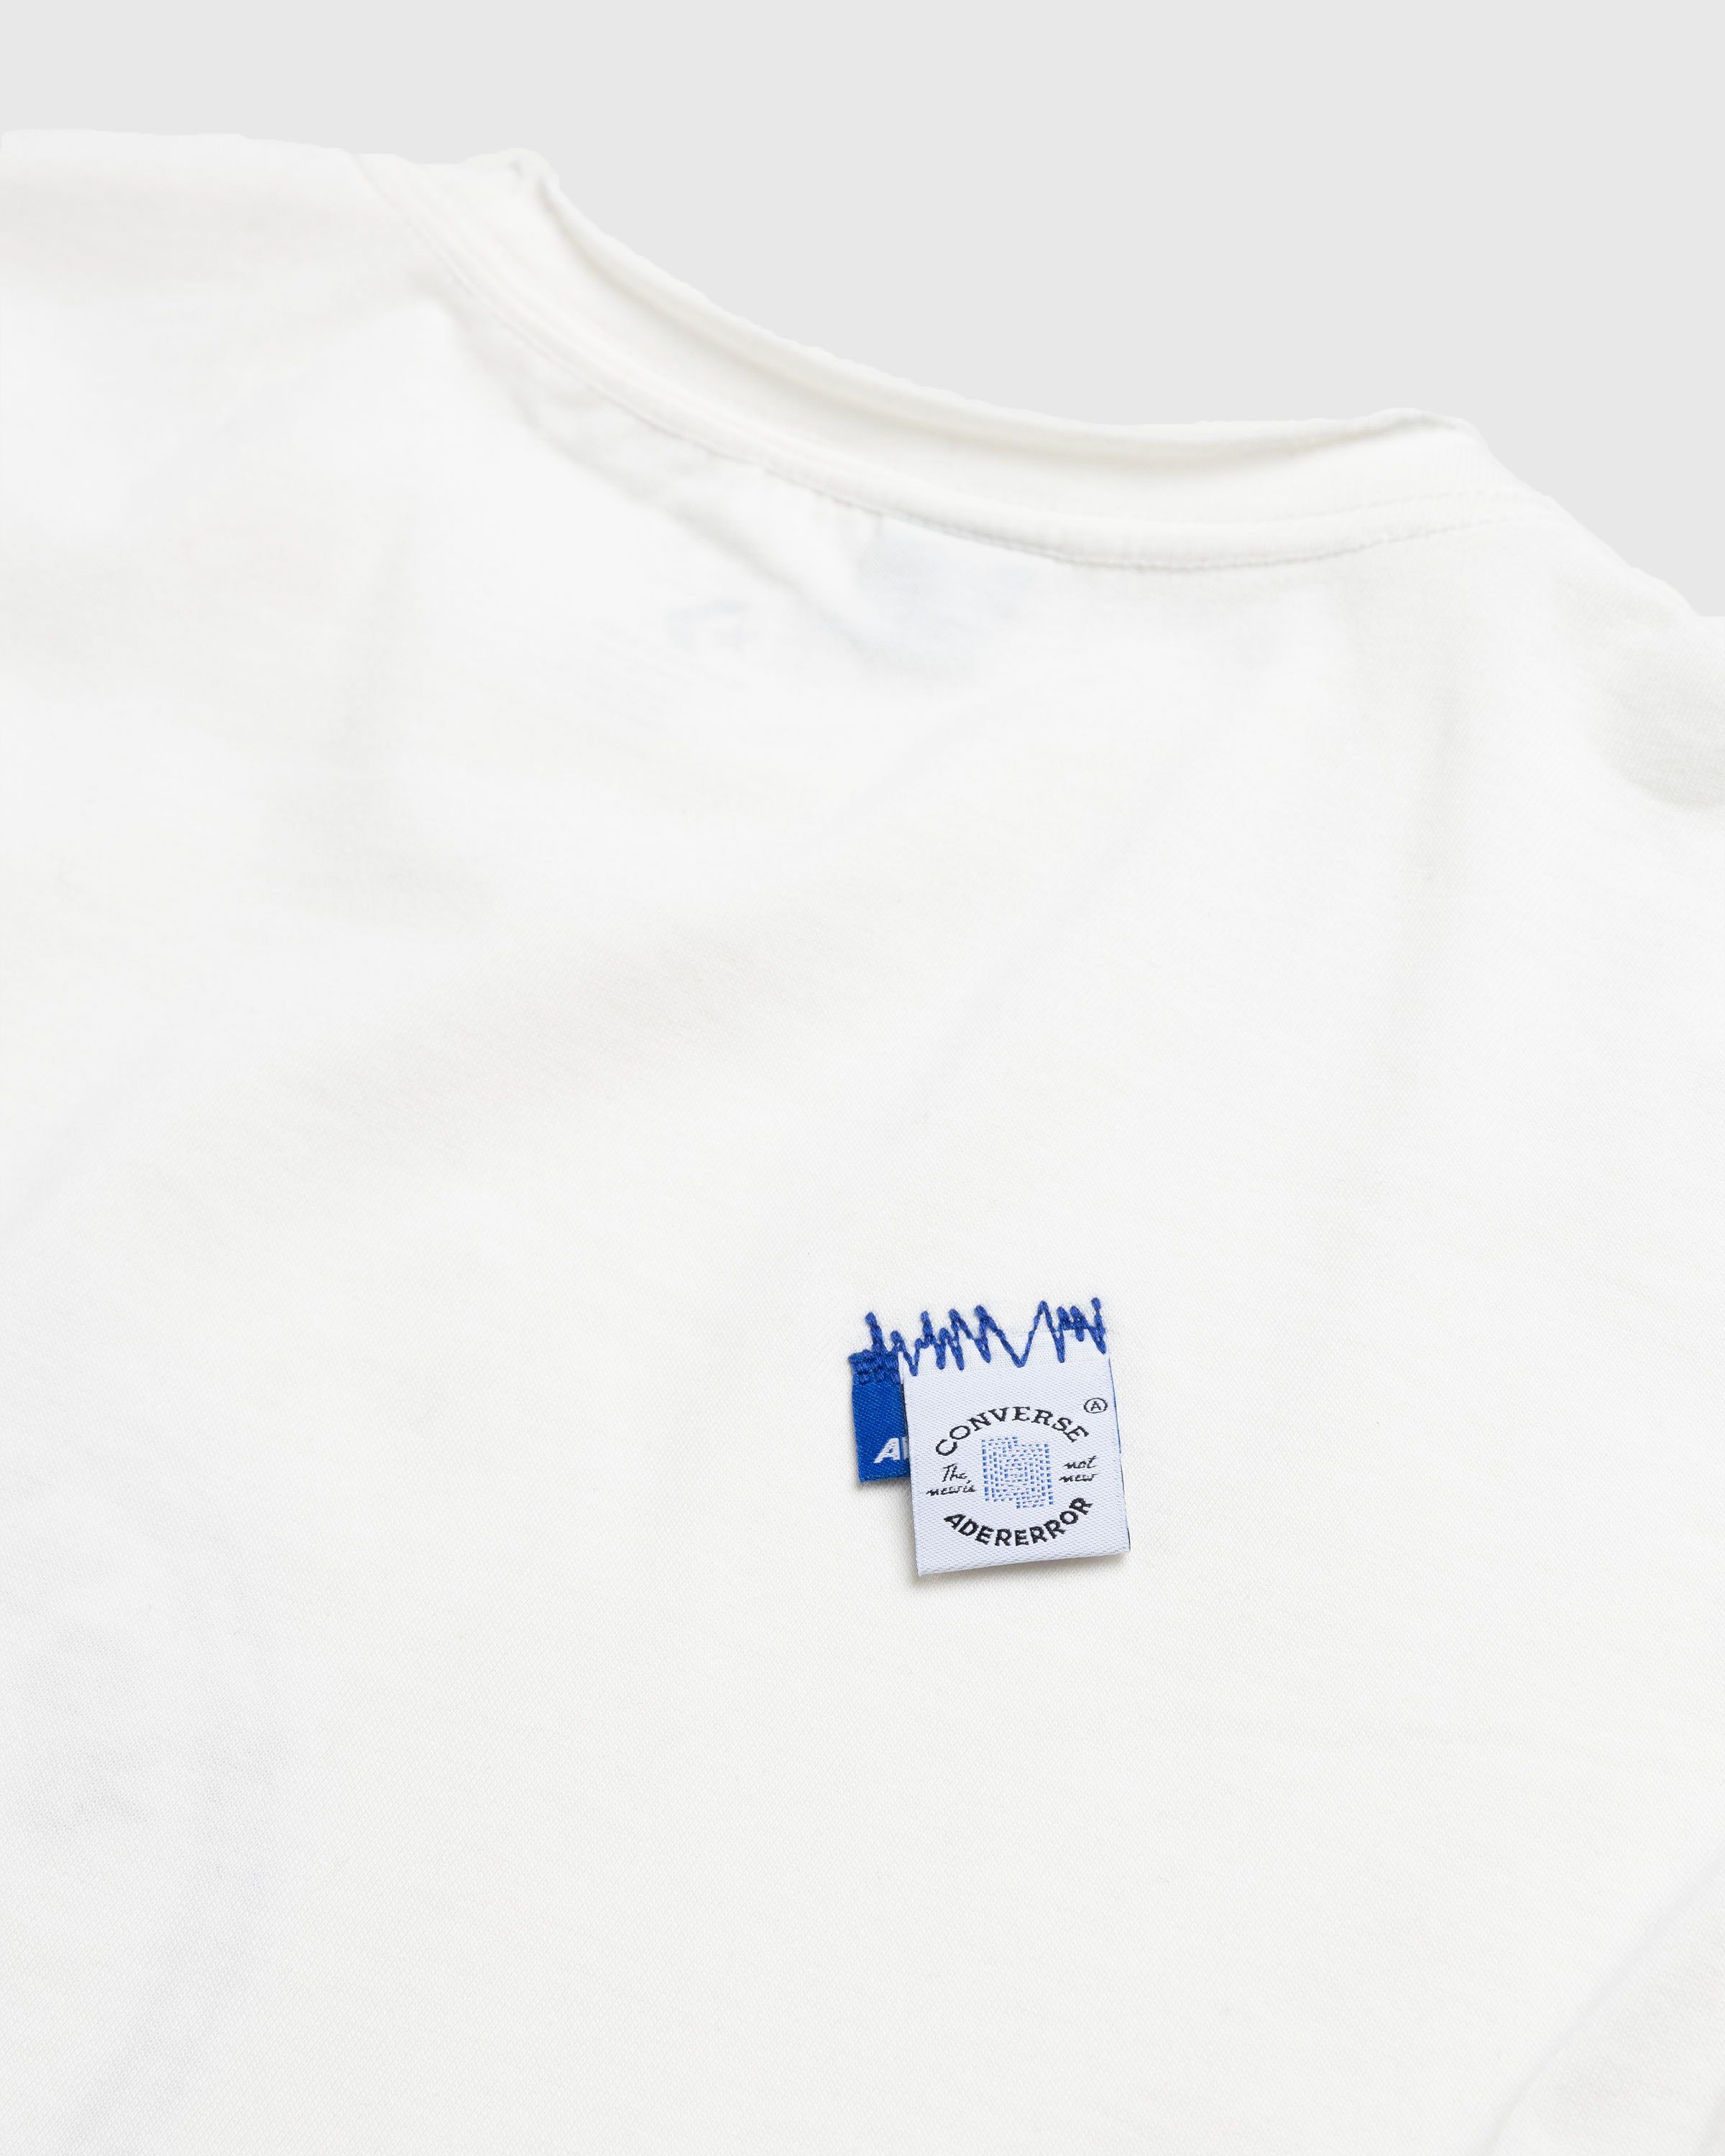 Converse x Ader Error - Shapes T-Shirt Cloud Dancer - Clothing - White - Image 6